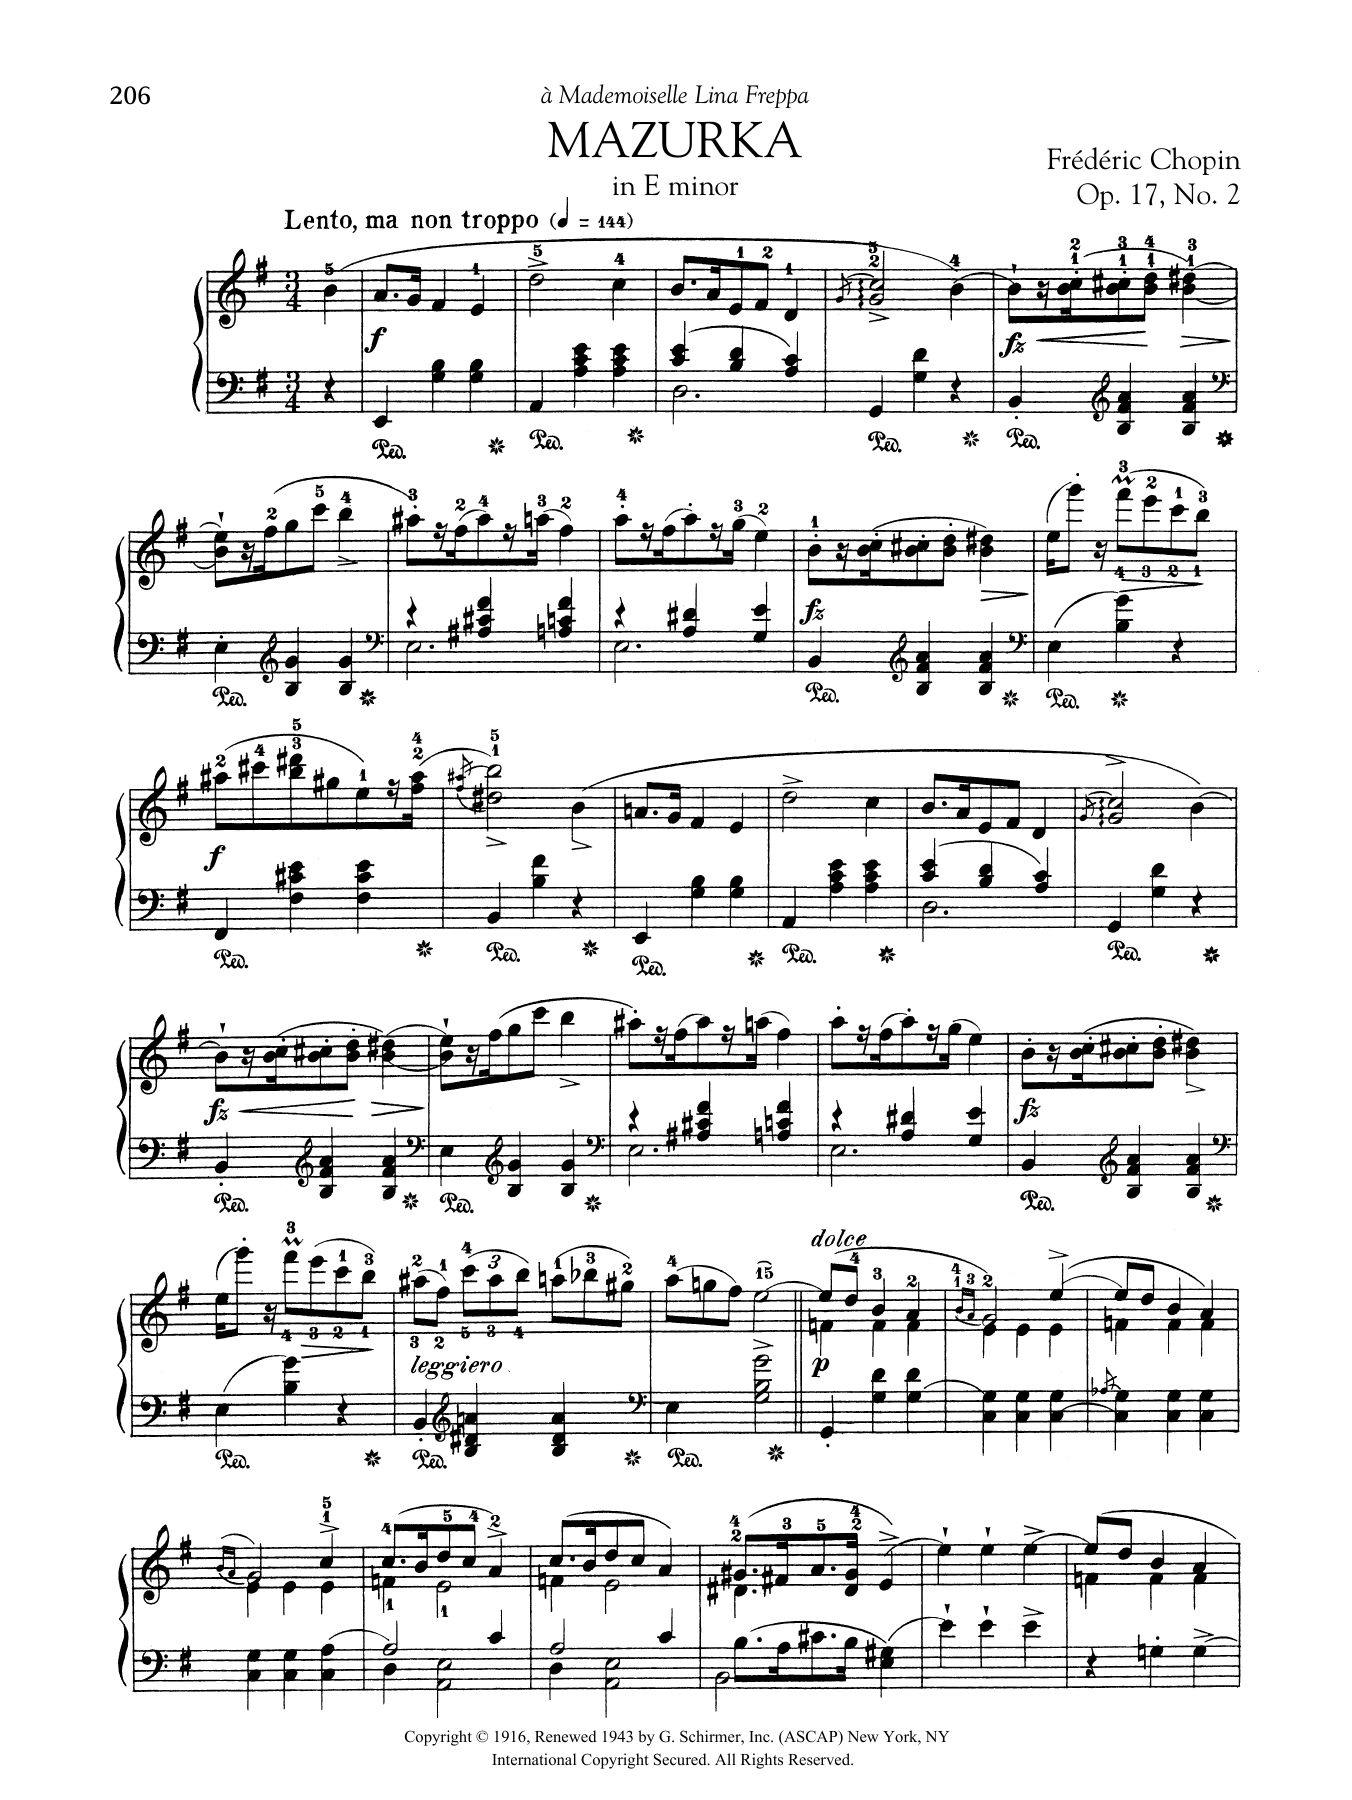 Mazurka in E minor, Op. 17, No. 2 sheet music